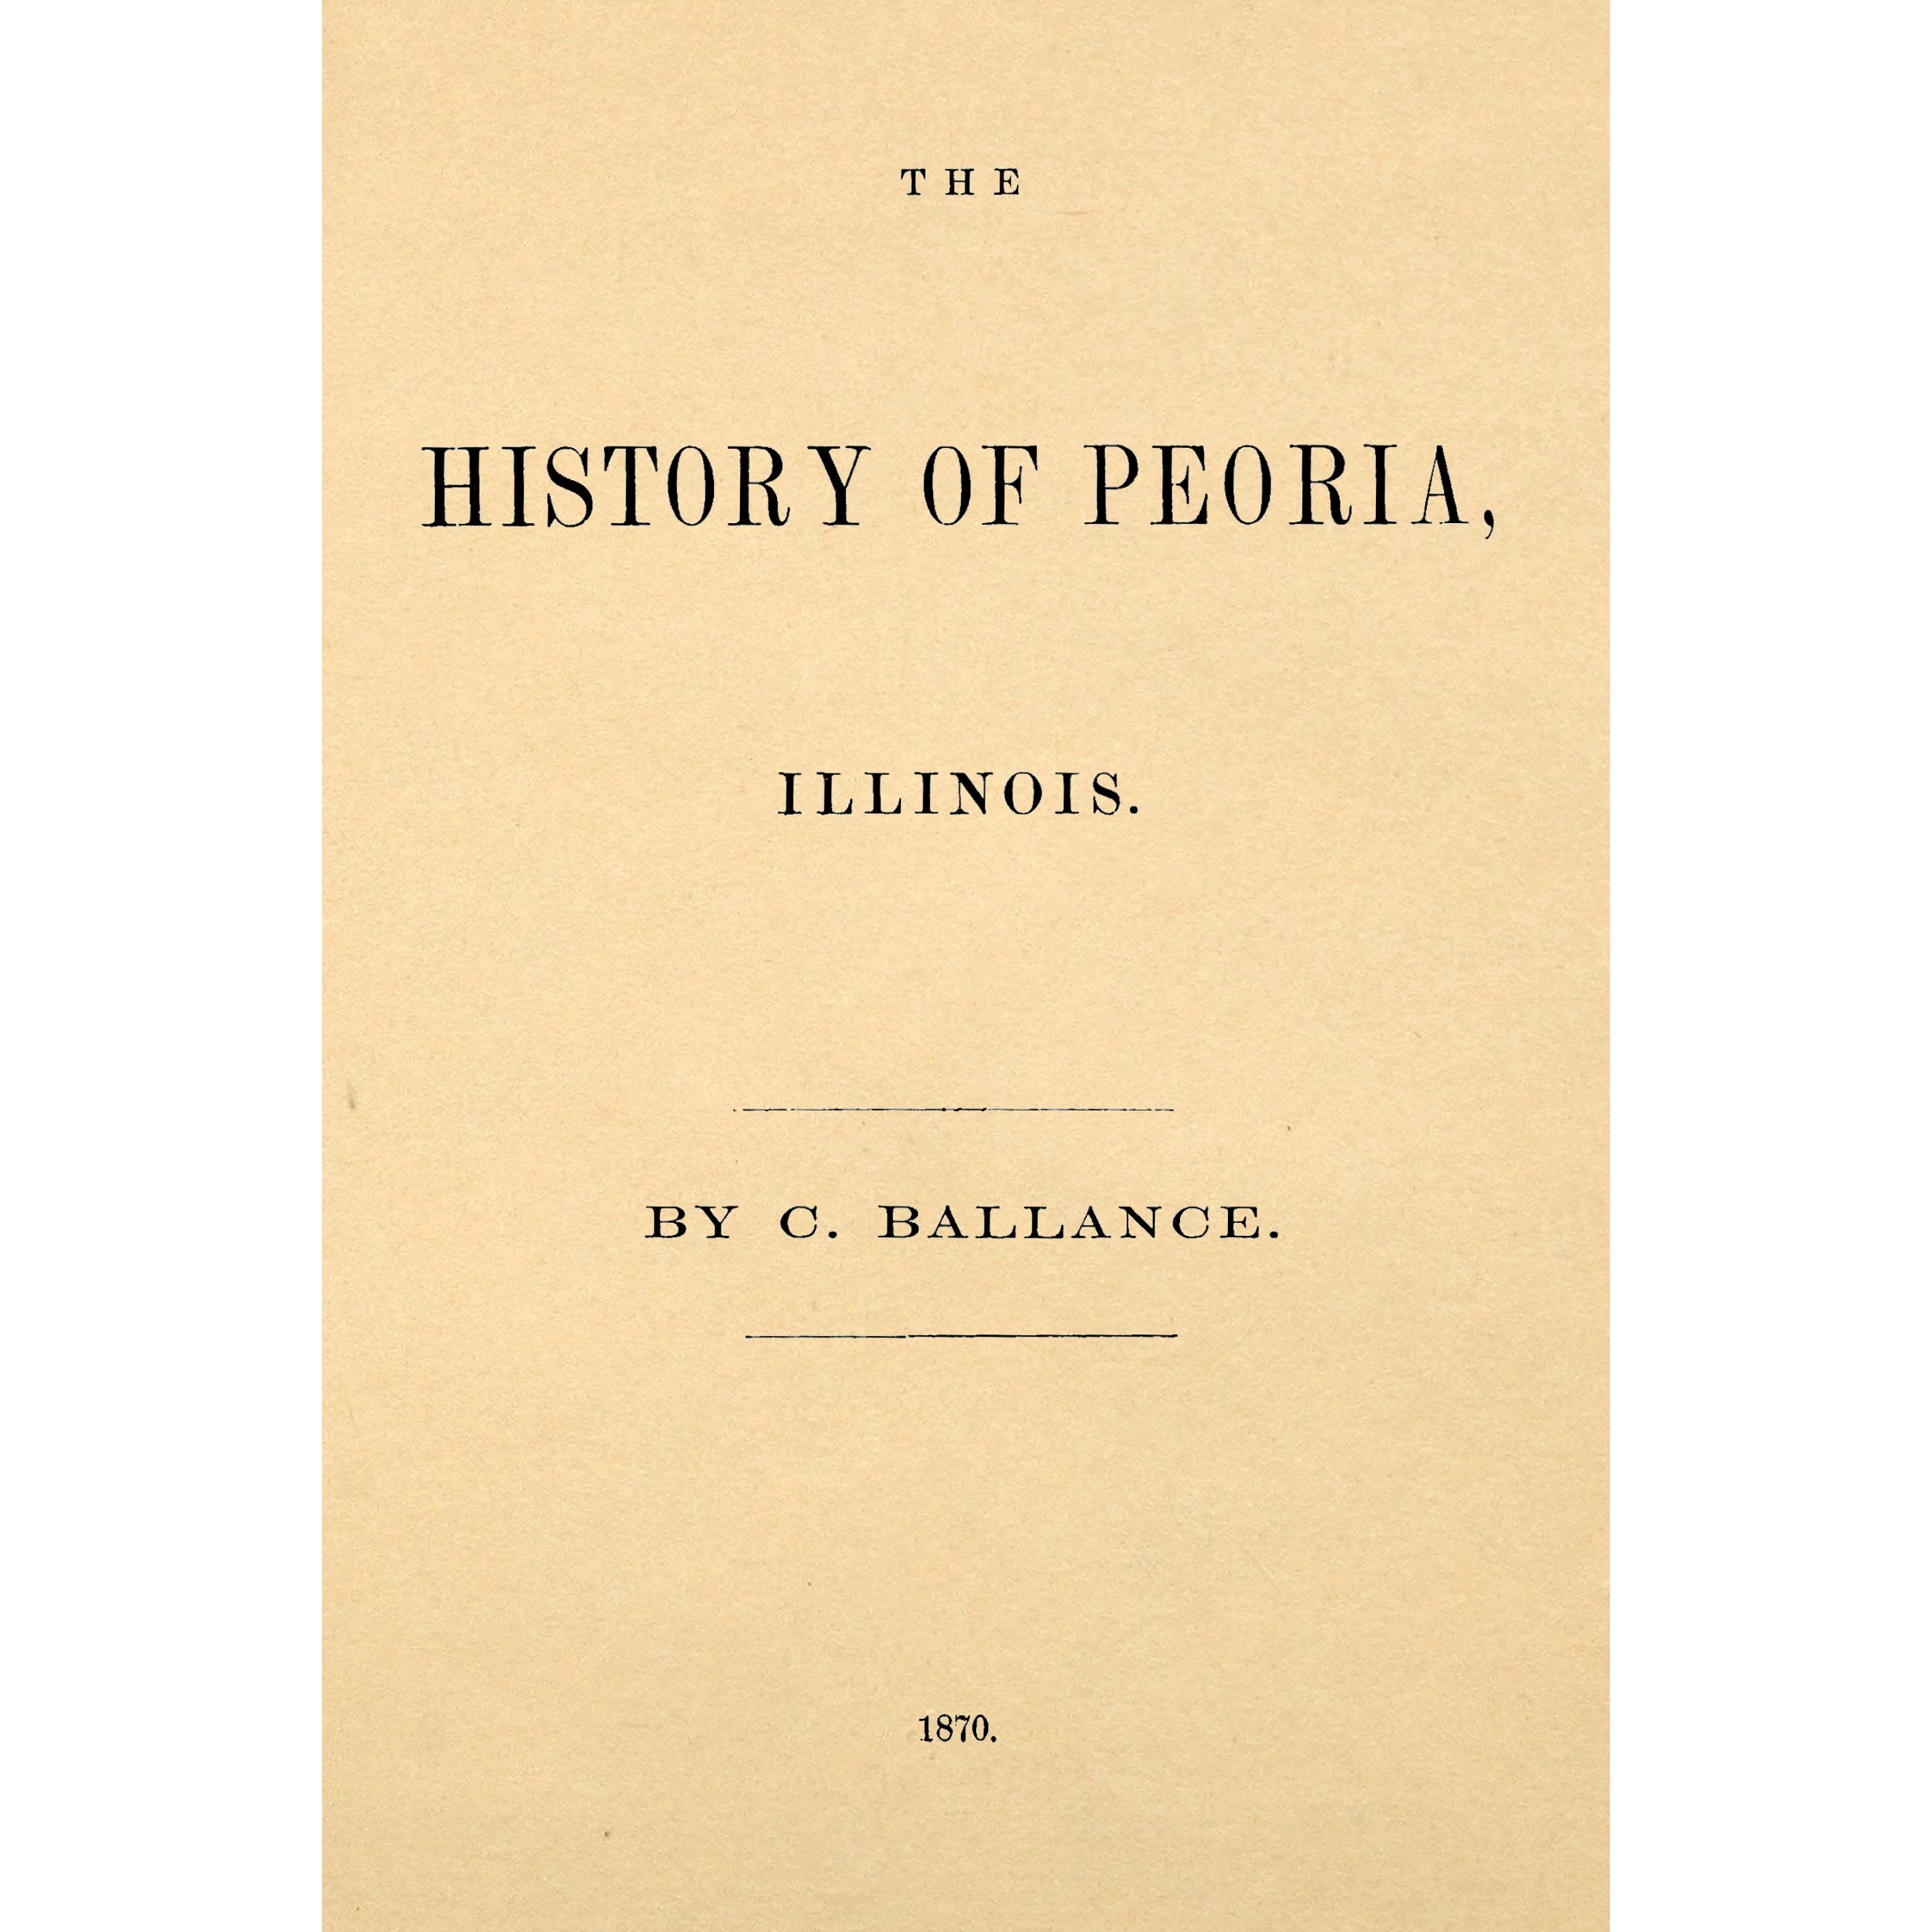 The history of Peoria, Illinois